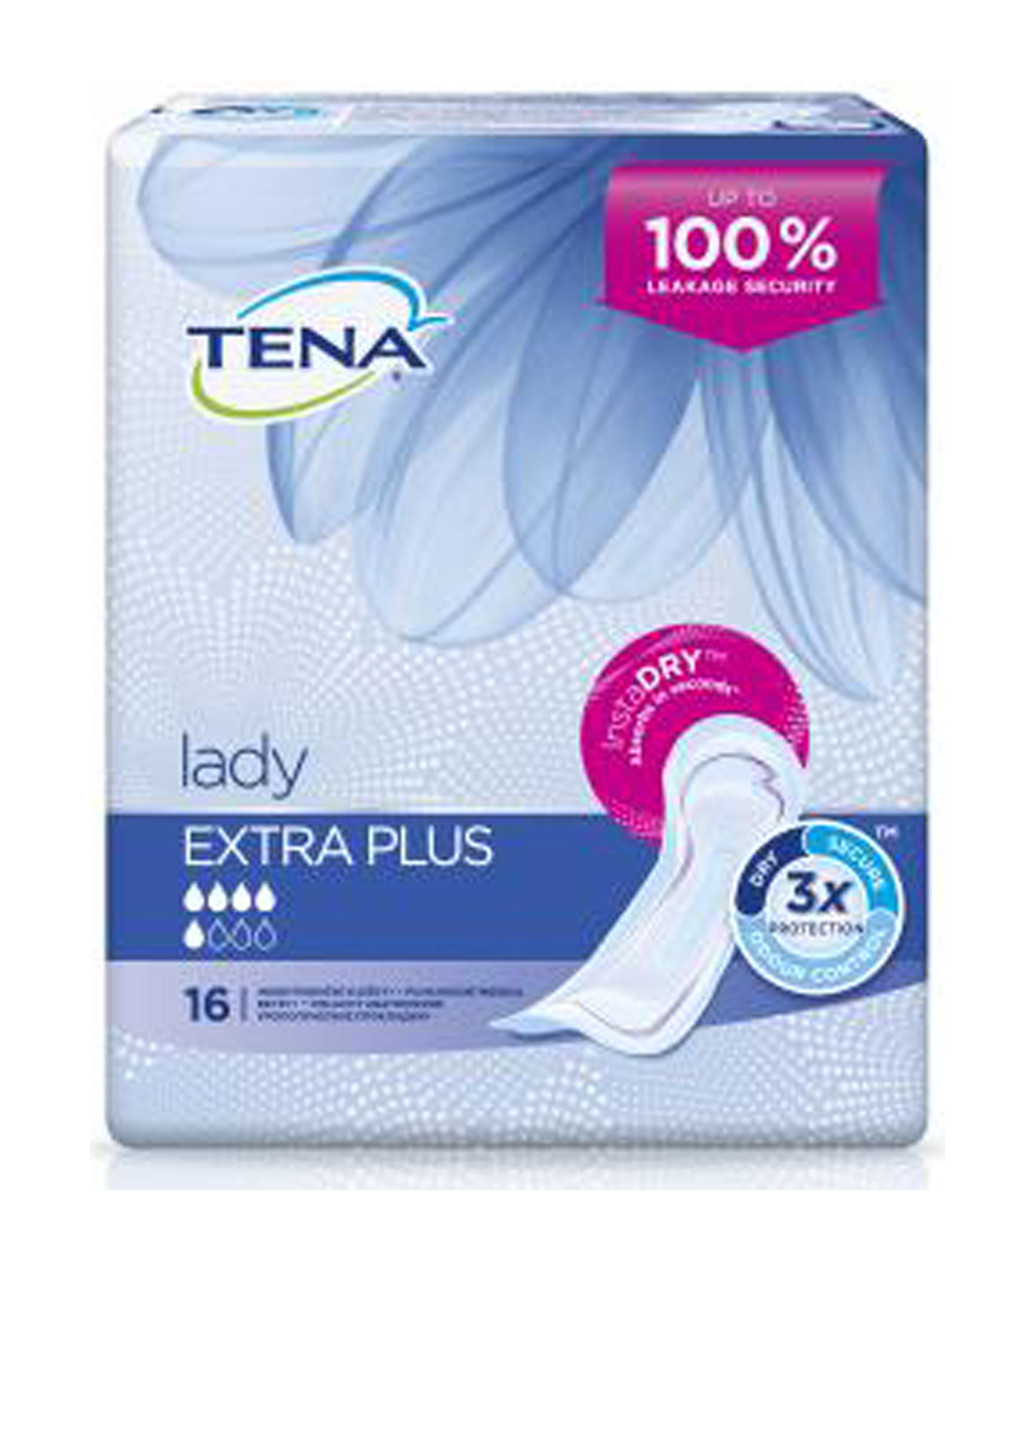 Урологические прокладки Lady Extra plus Insta Dry (16 шт.) Tena (138200463)